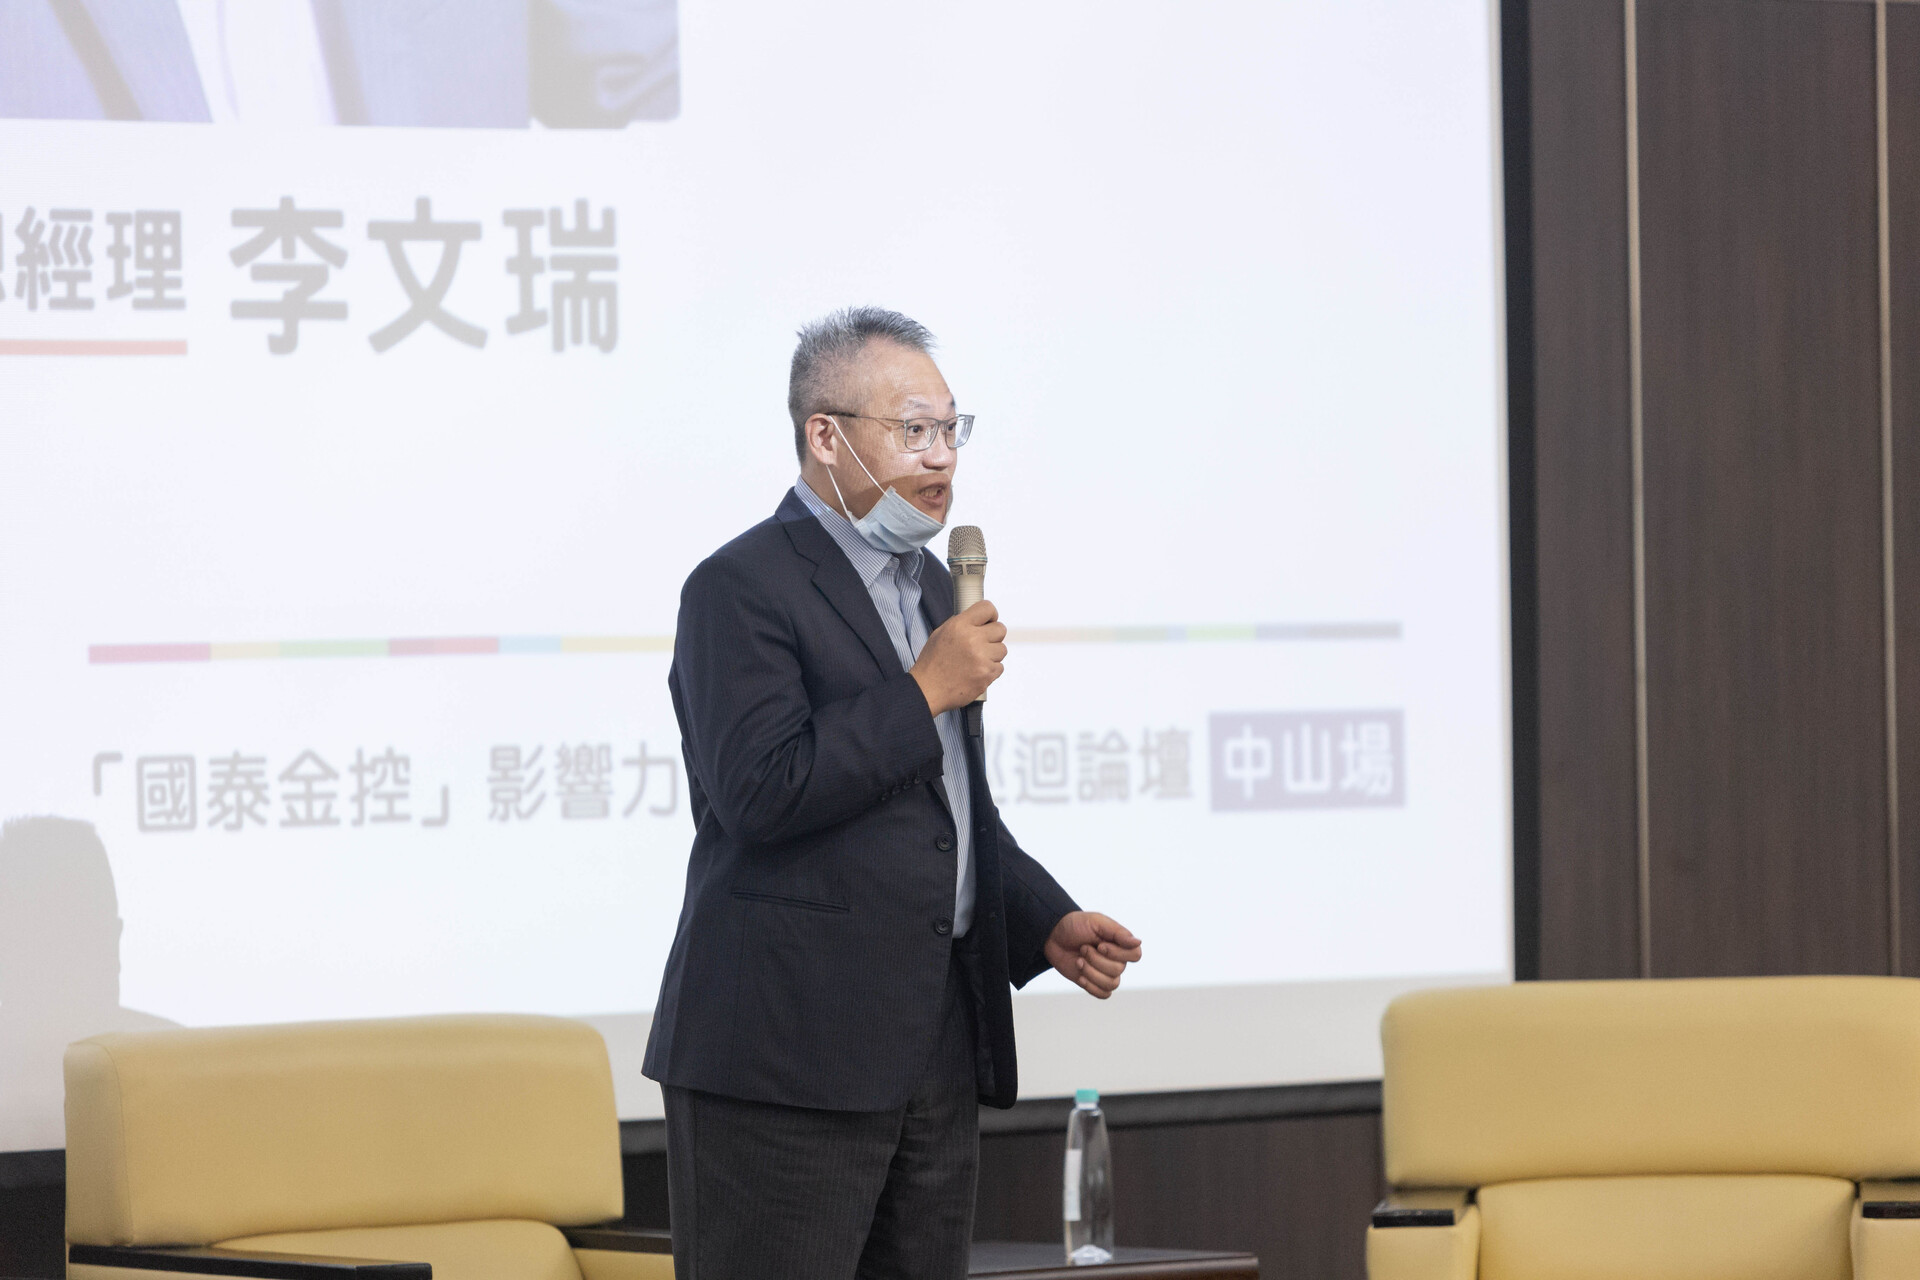 Speech by Vice President of Cathay Life Wen-Jui Li